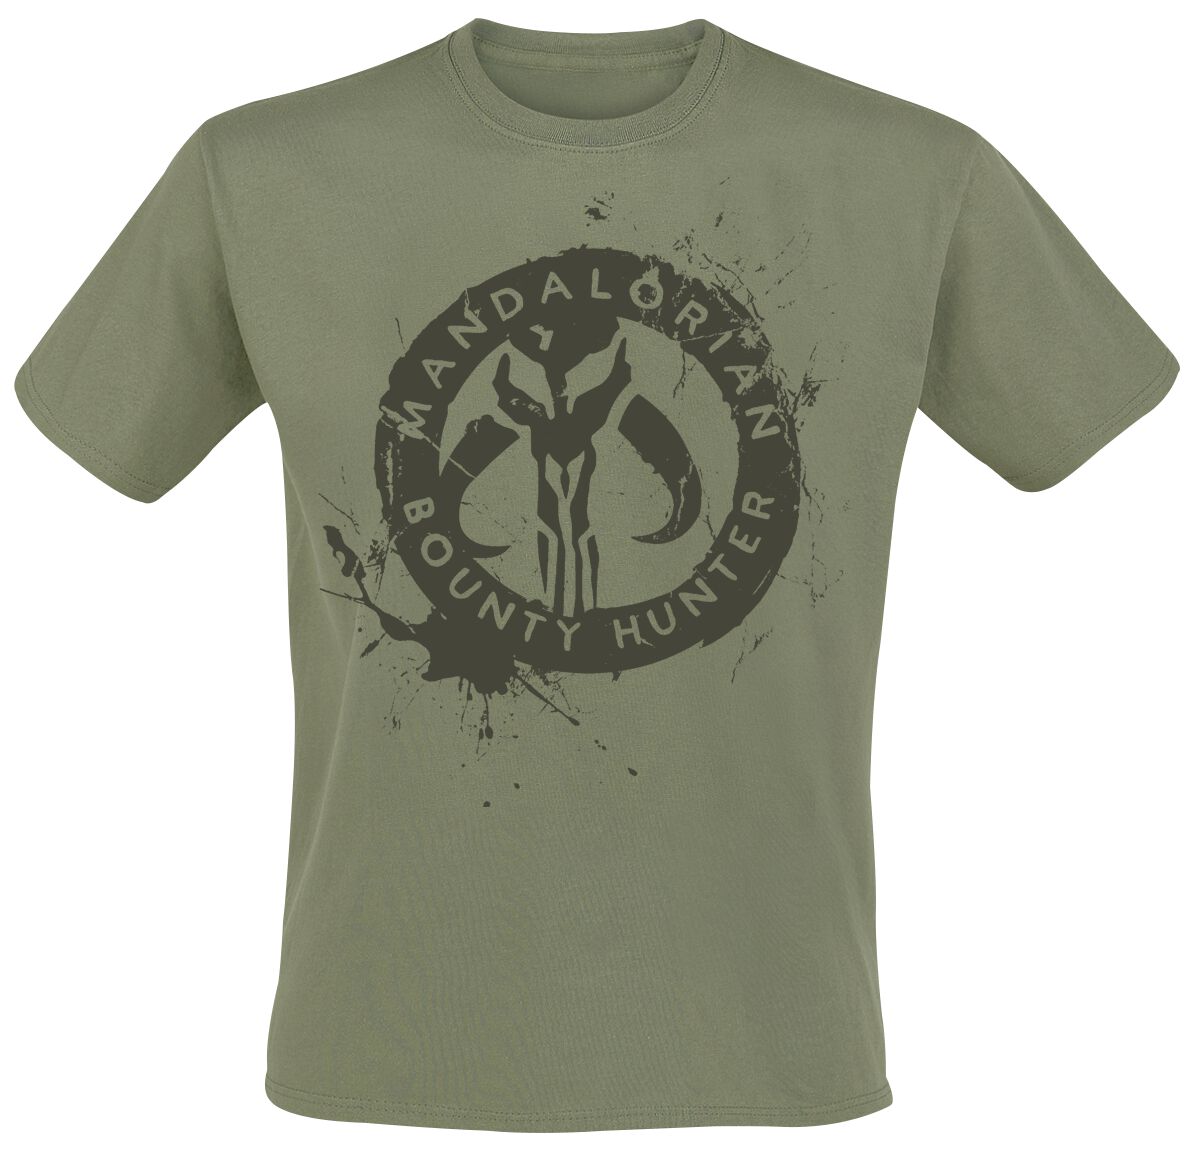 Star Wars The Mandalorian - Bounty Hunter T-Shirt olive